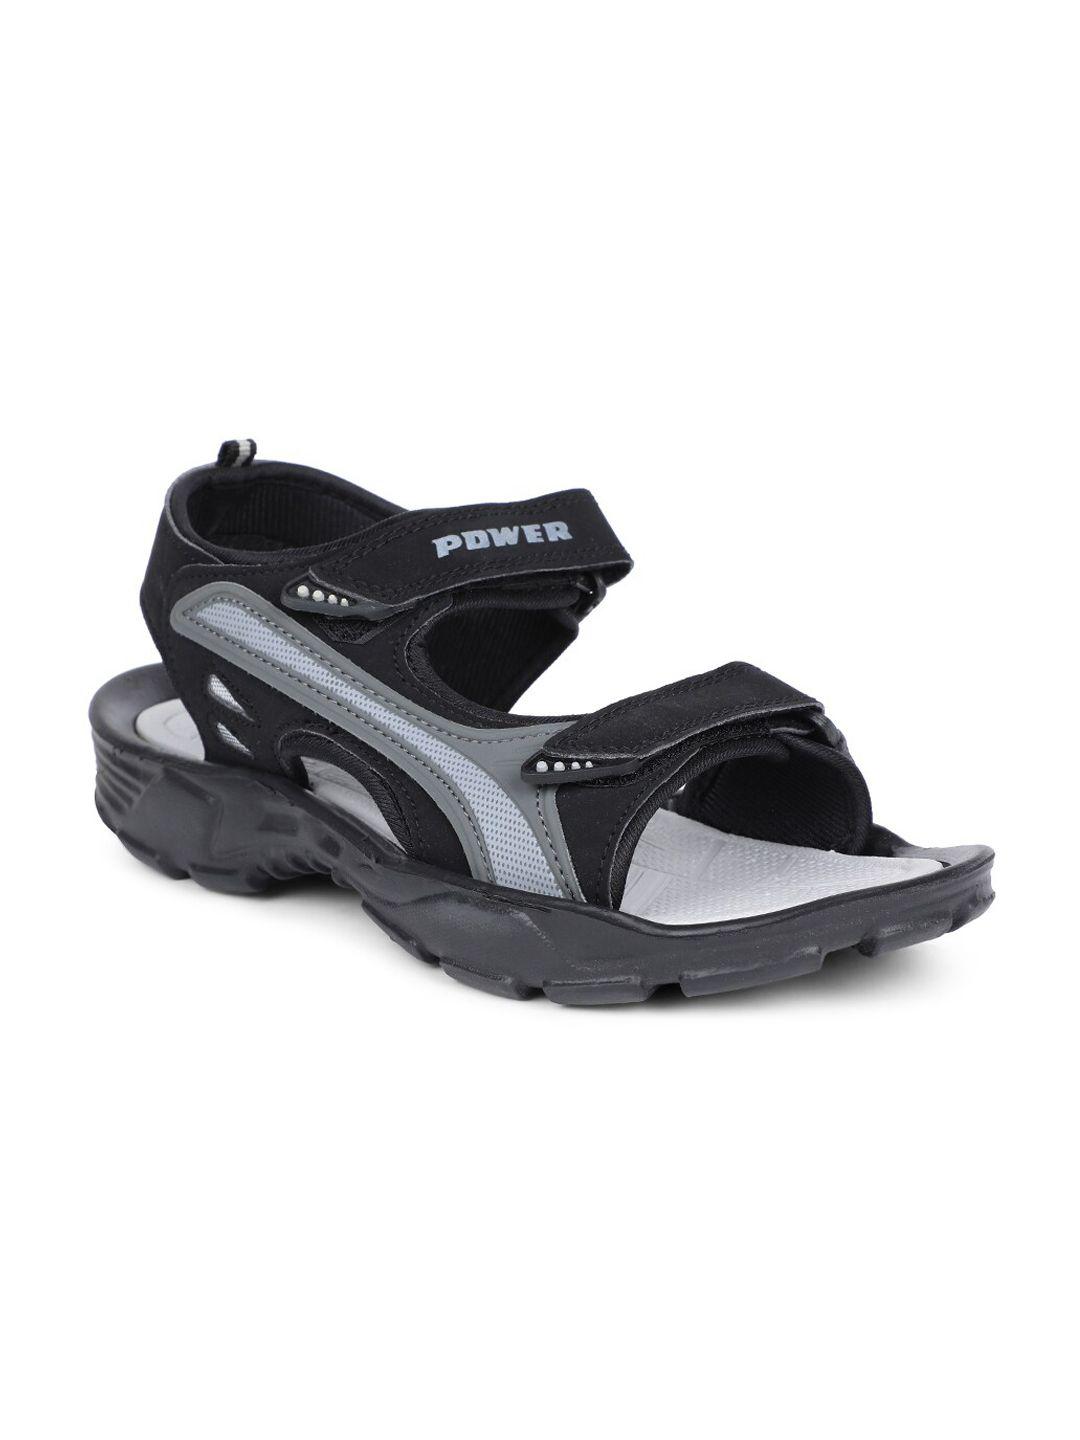 power-men-black-&-grey-patterned-sports-sandals